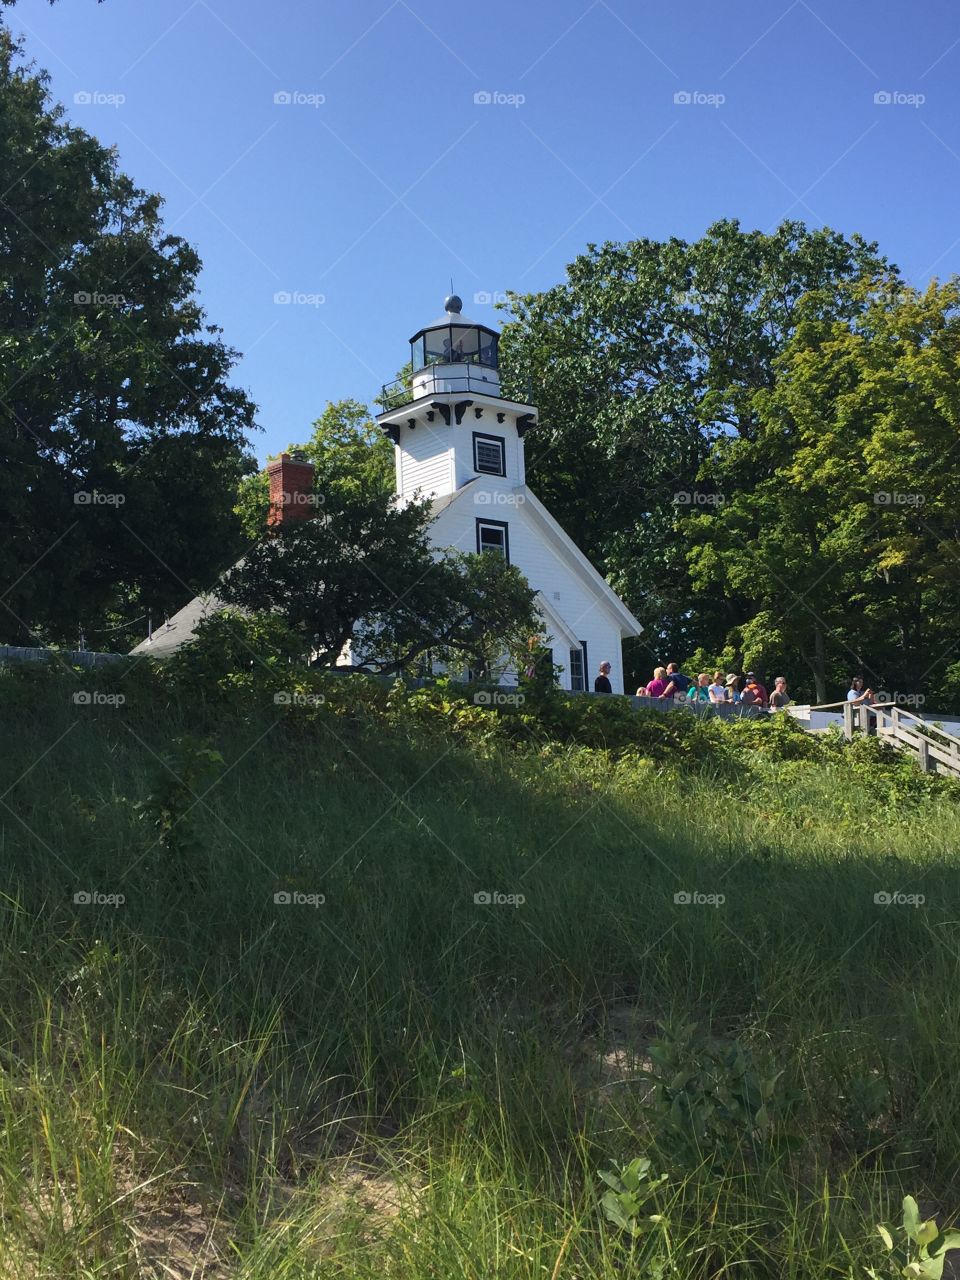 Old mission peninsula lighthouse